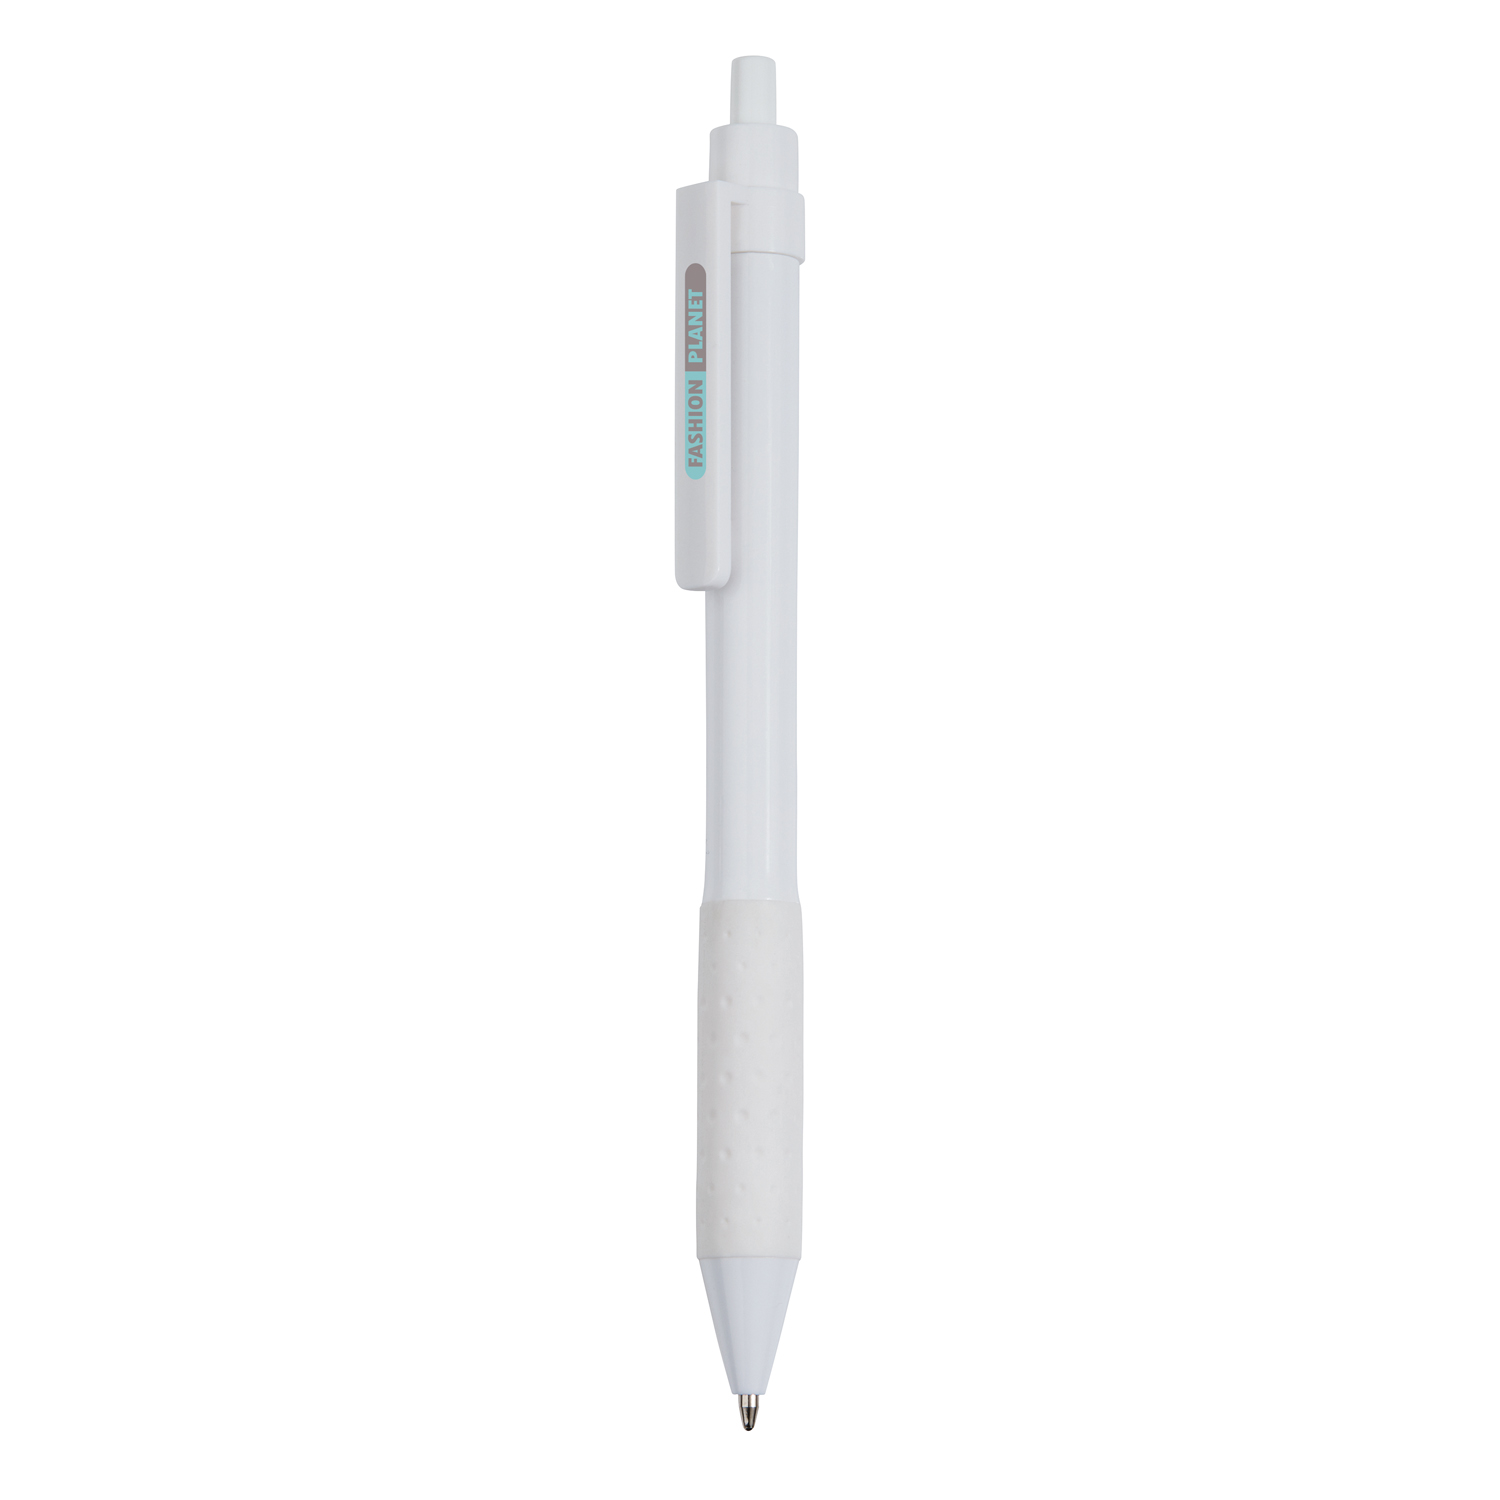 Ручка X2, белый